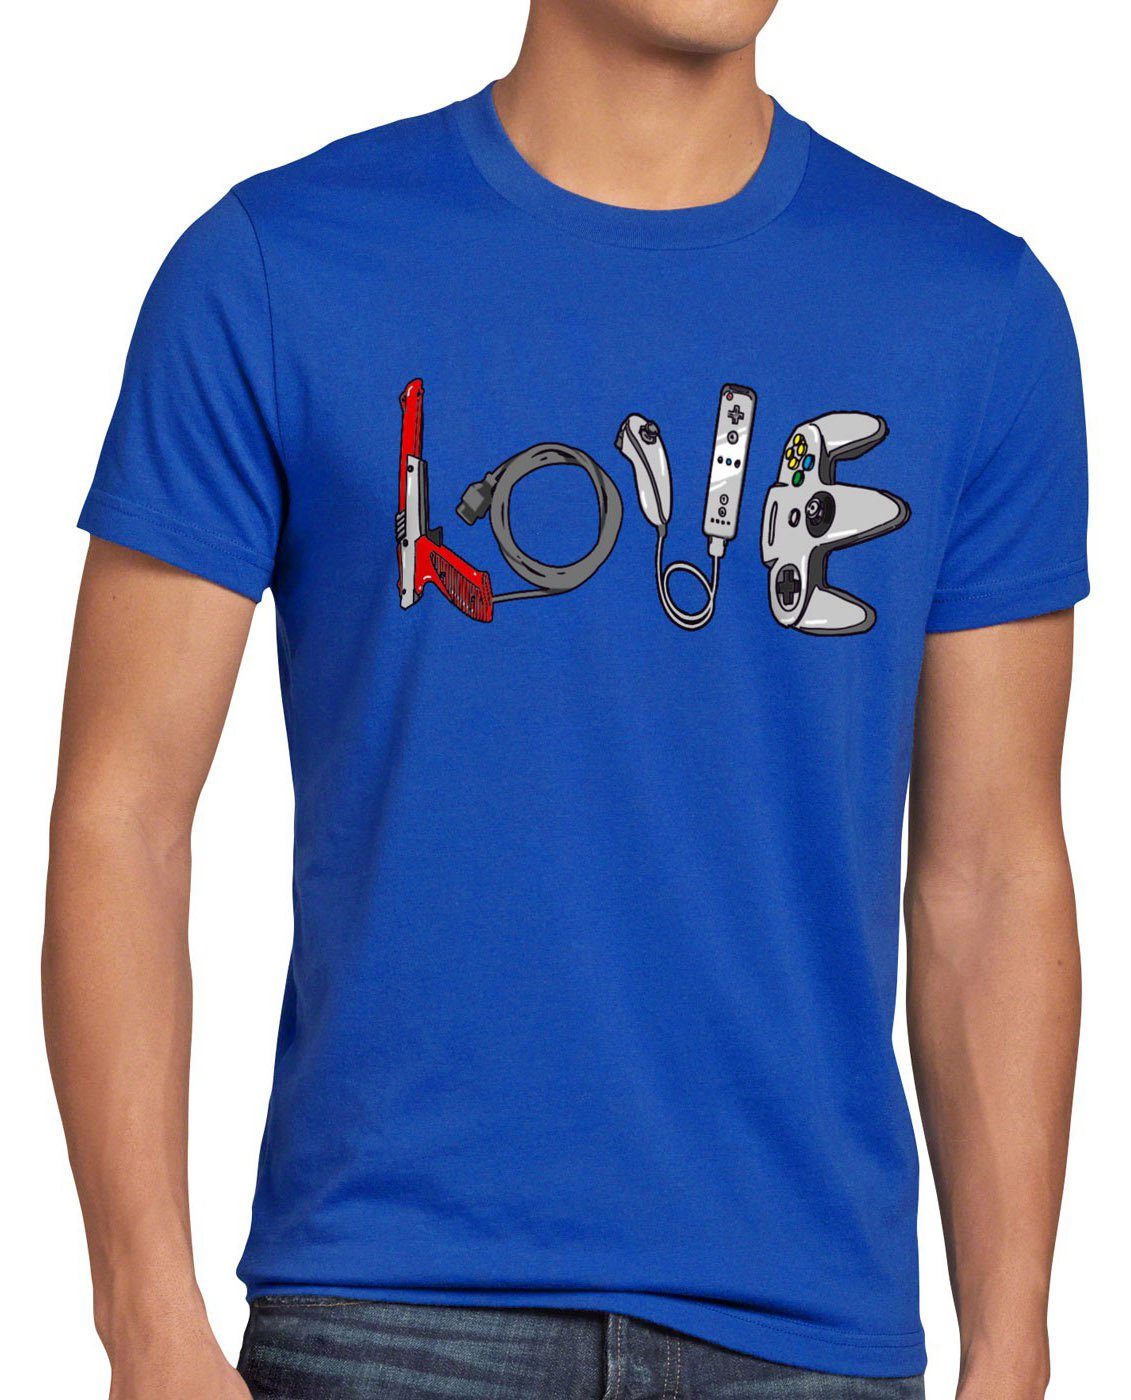 style3 Print-Shirt Herren T-Shirt LOVE Gamer konsole kart nes snes n64 switch zelda mario nintendo blau